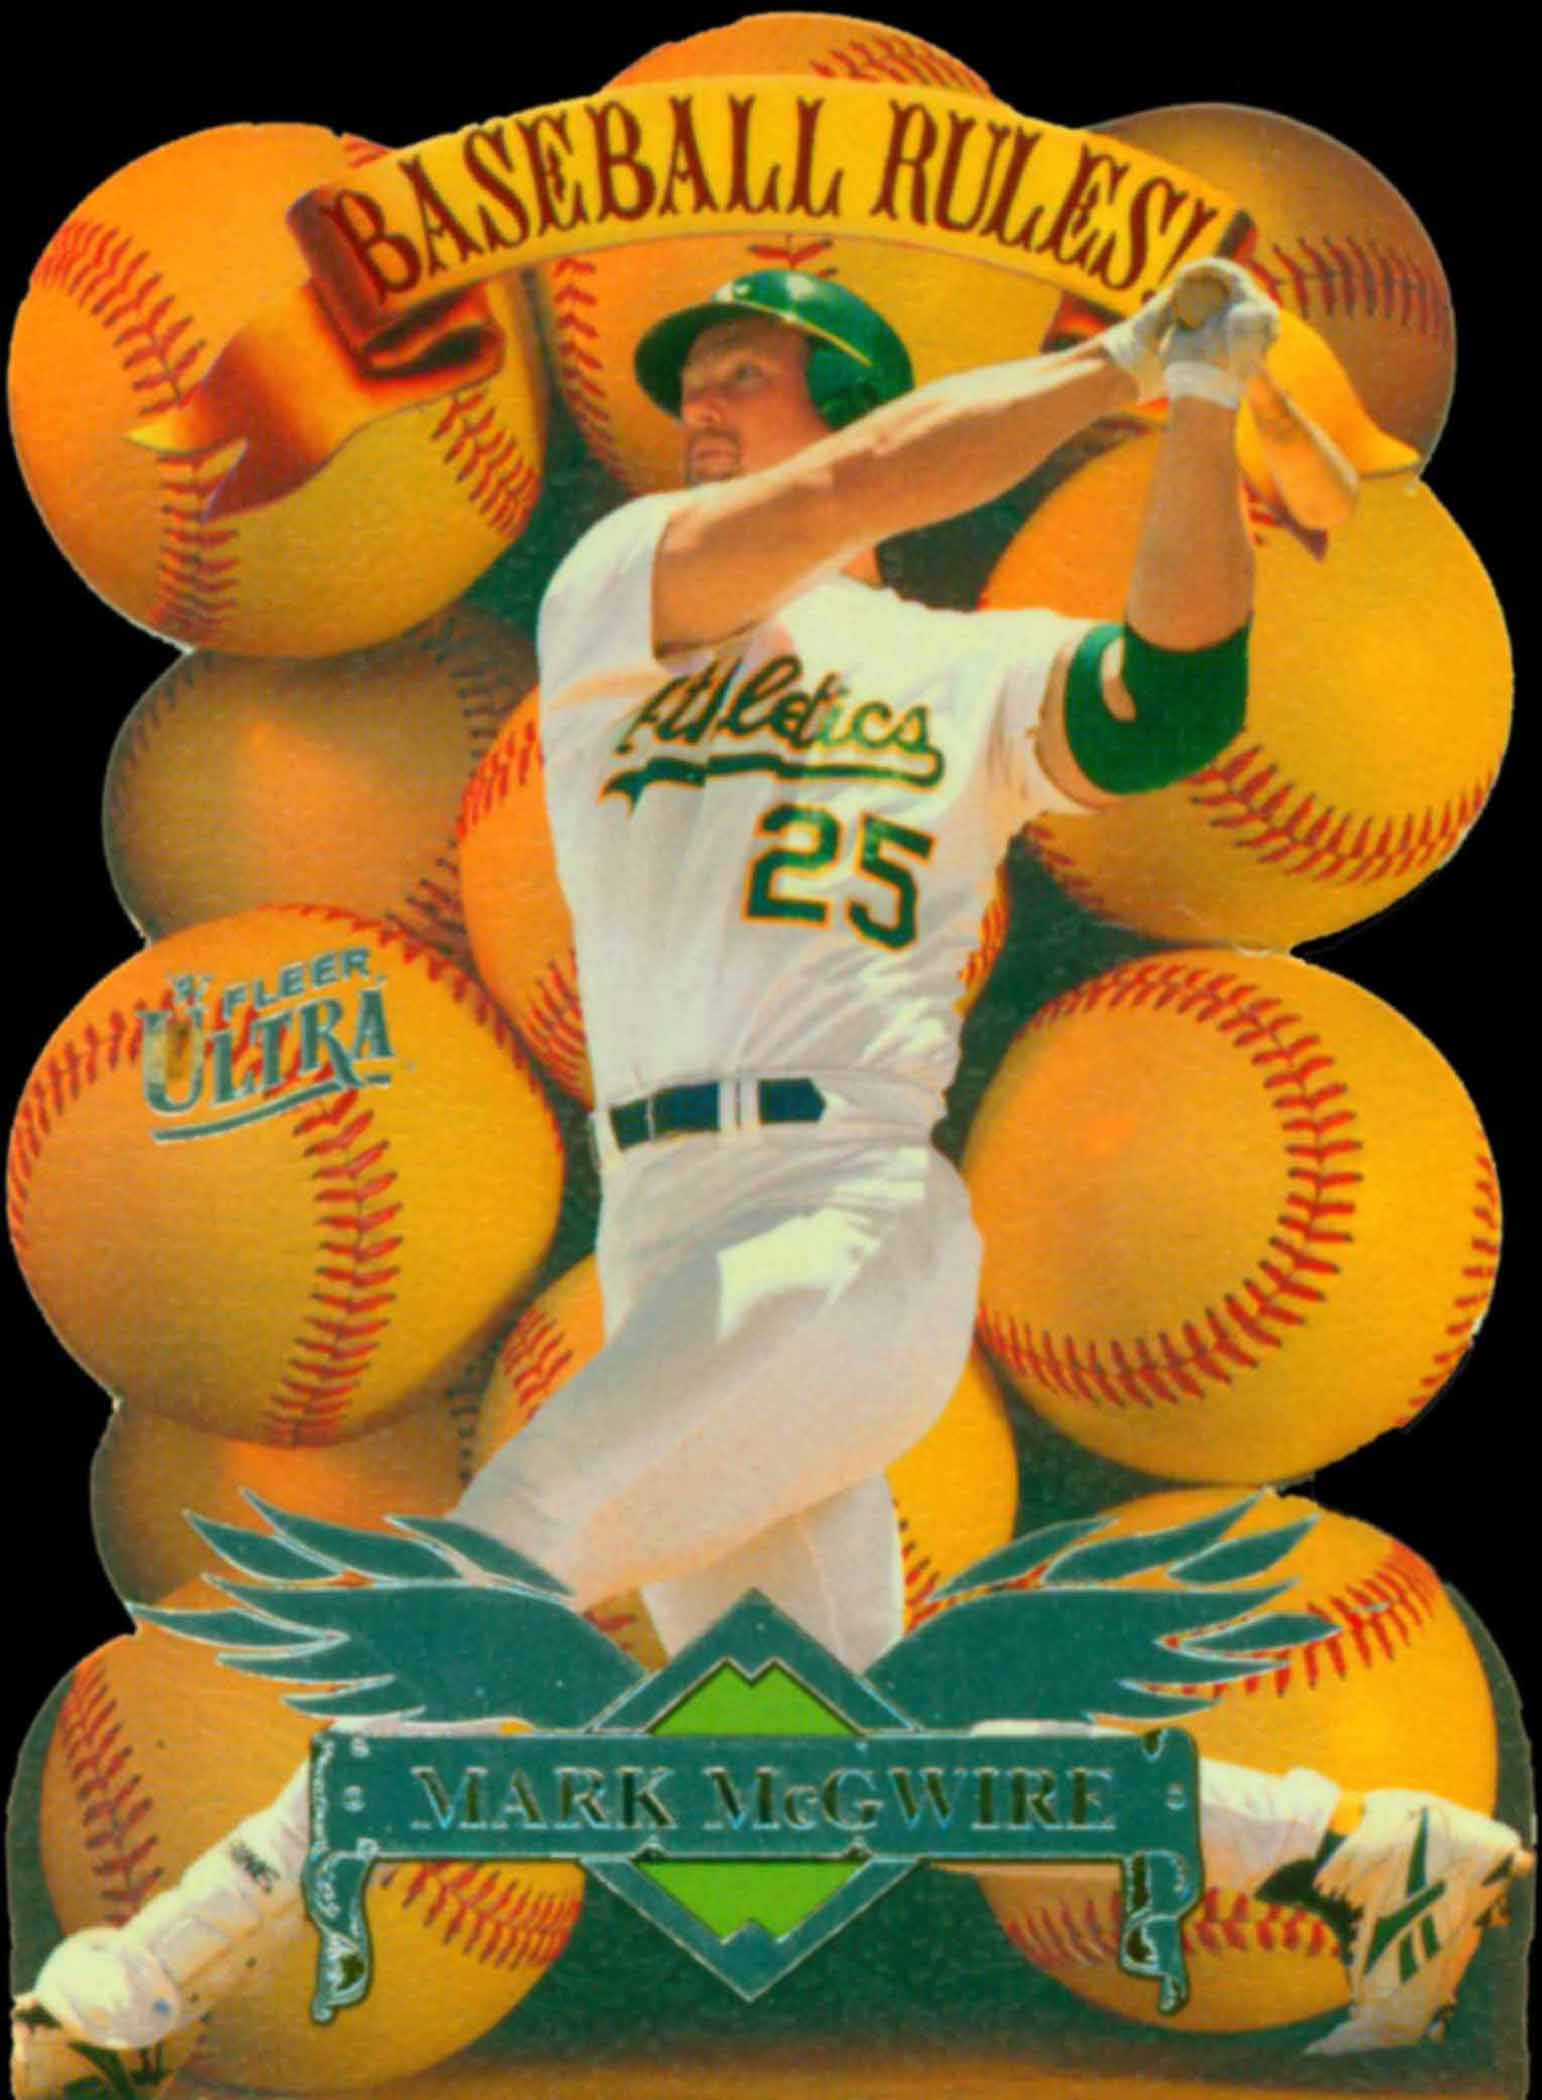 1997 Ultra Baseball Rules